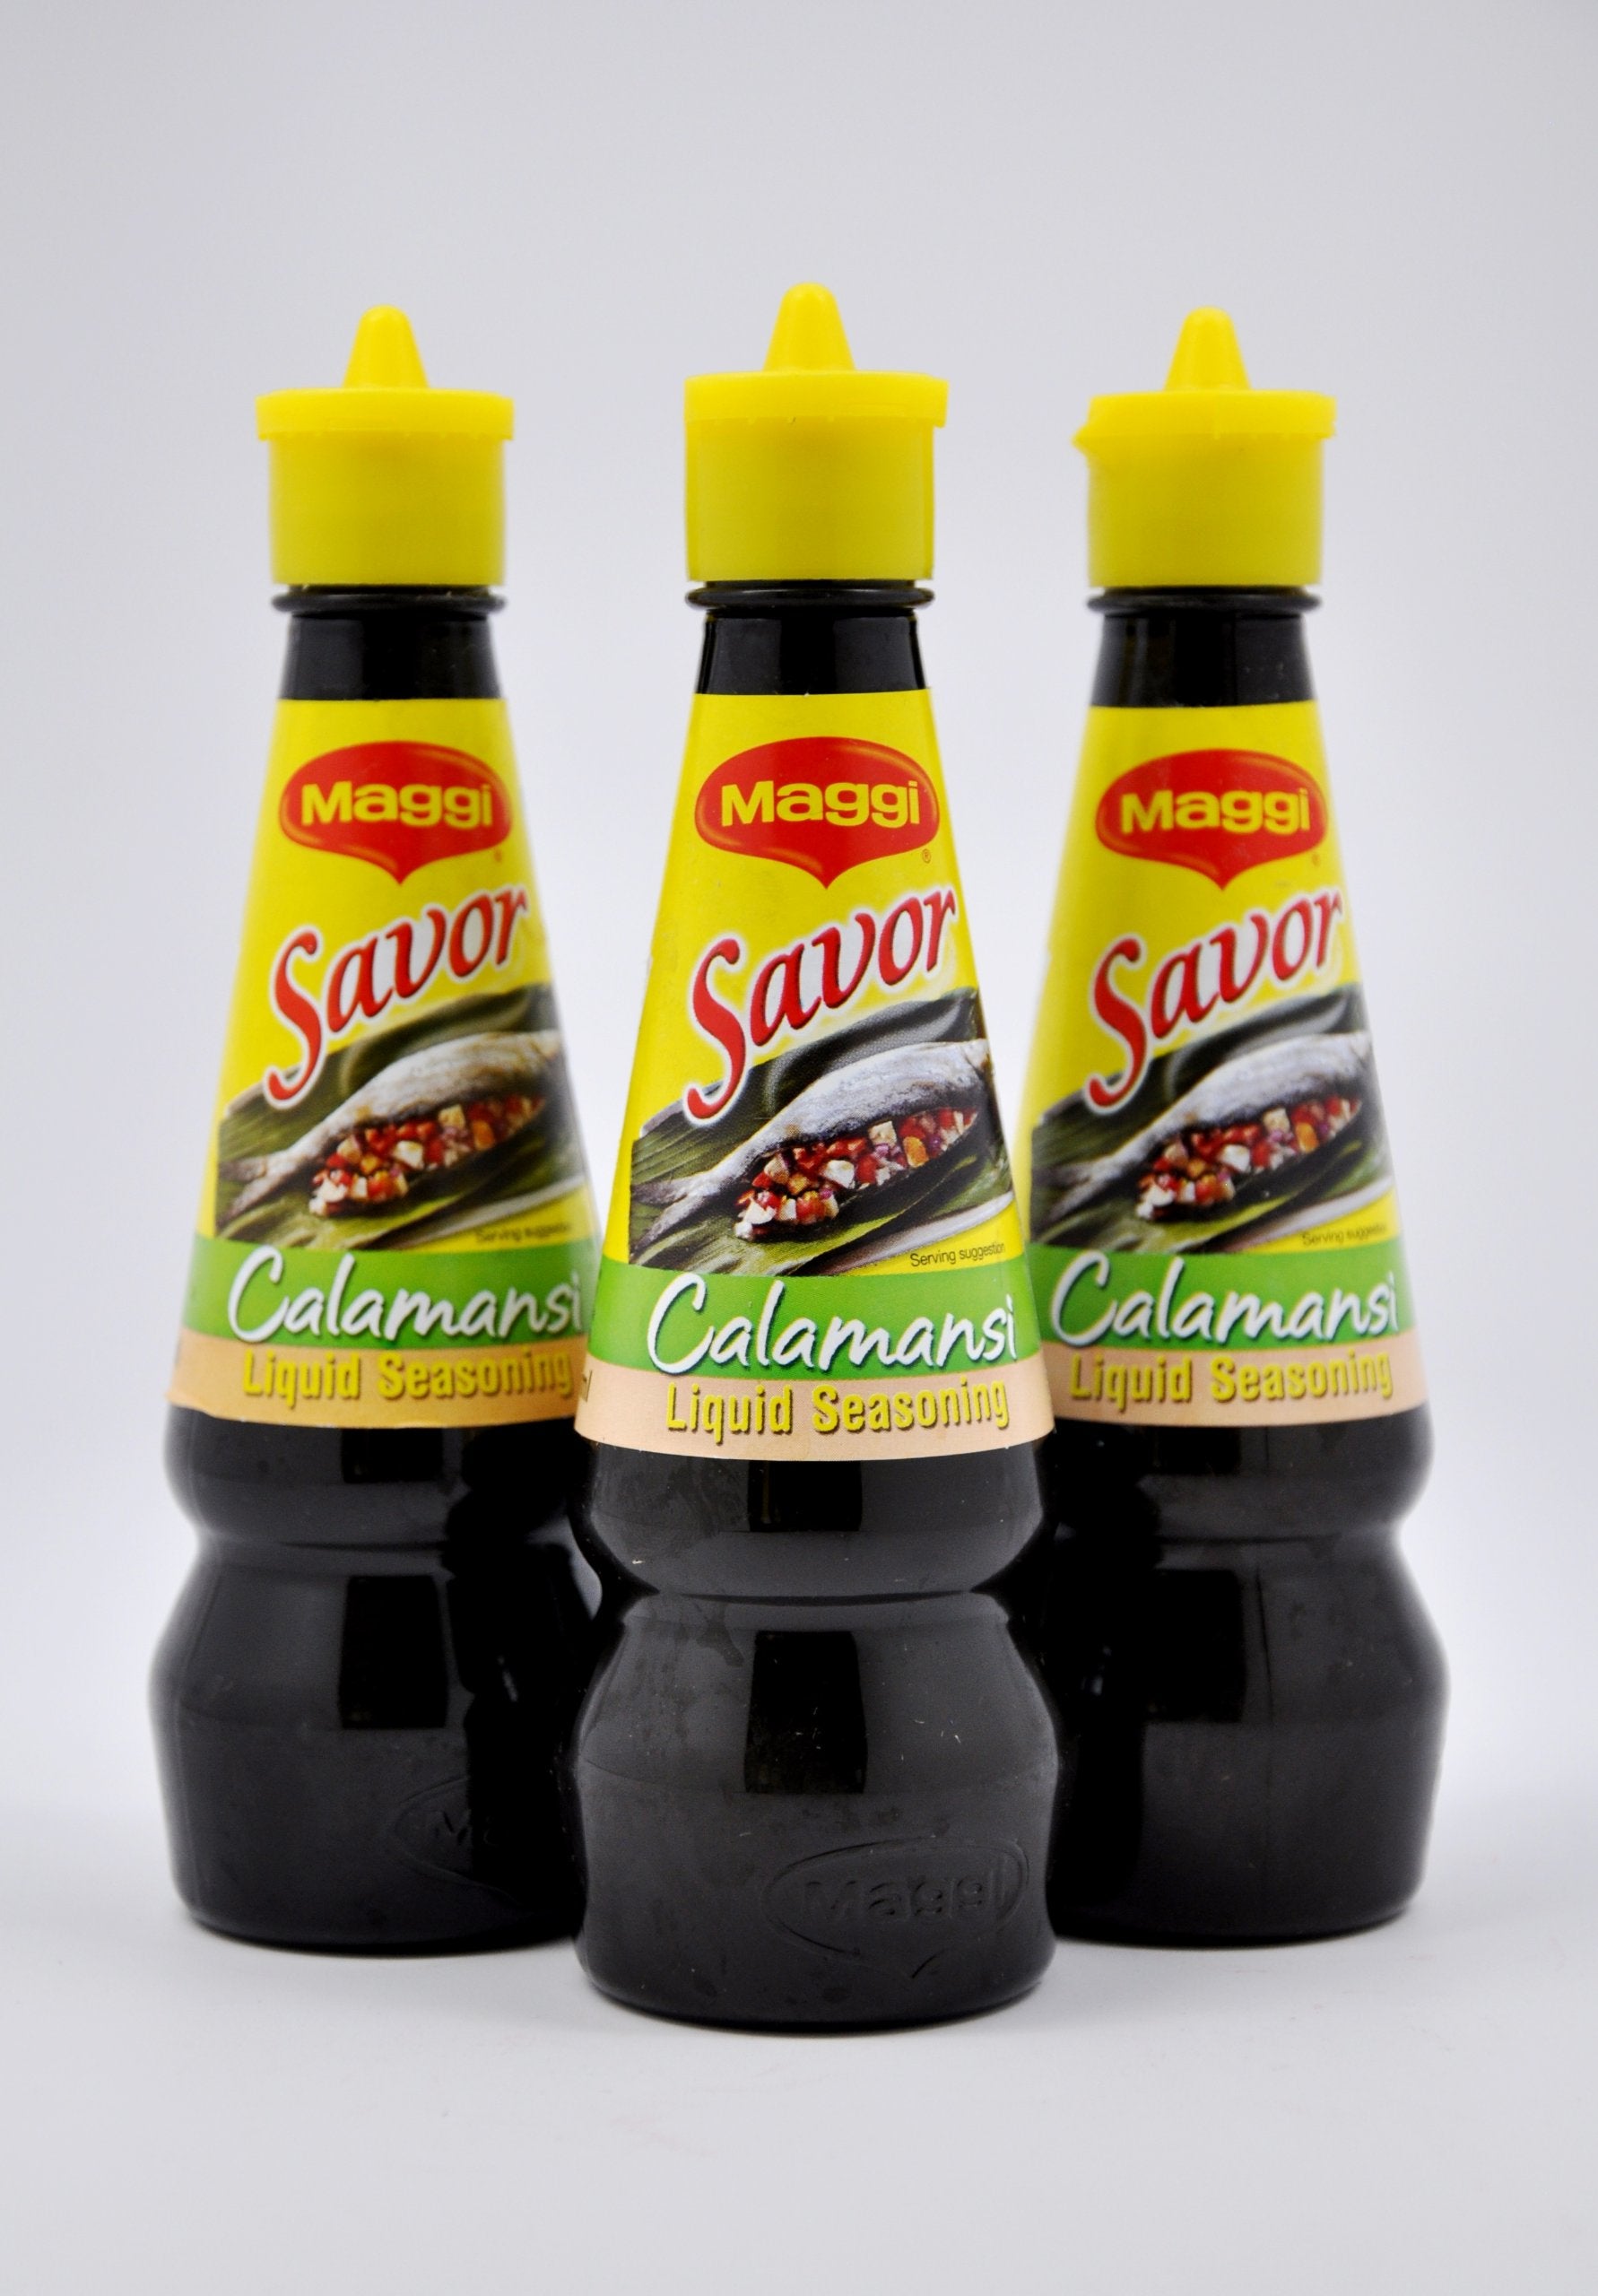 Maggi Savor Calamansi Liquid Seasoning 130ml (3 bottle x 130ml)